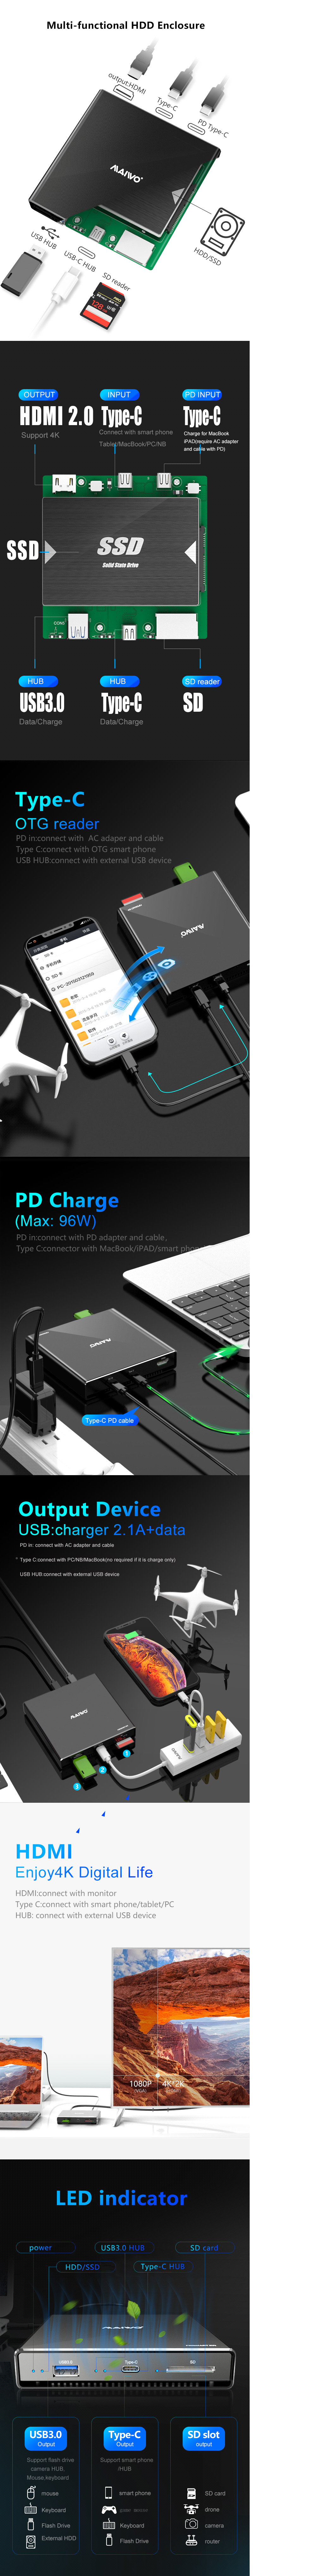 MAIWO HDD Enclosure SD Card Reader USB Hub Type-C OTG Reader PD Charge HD Converter